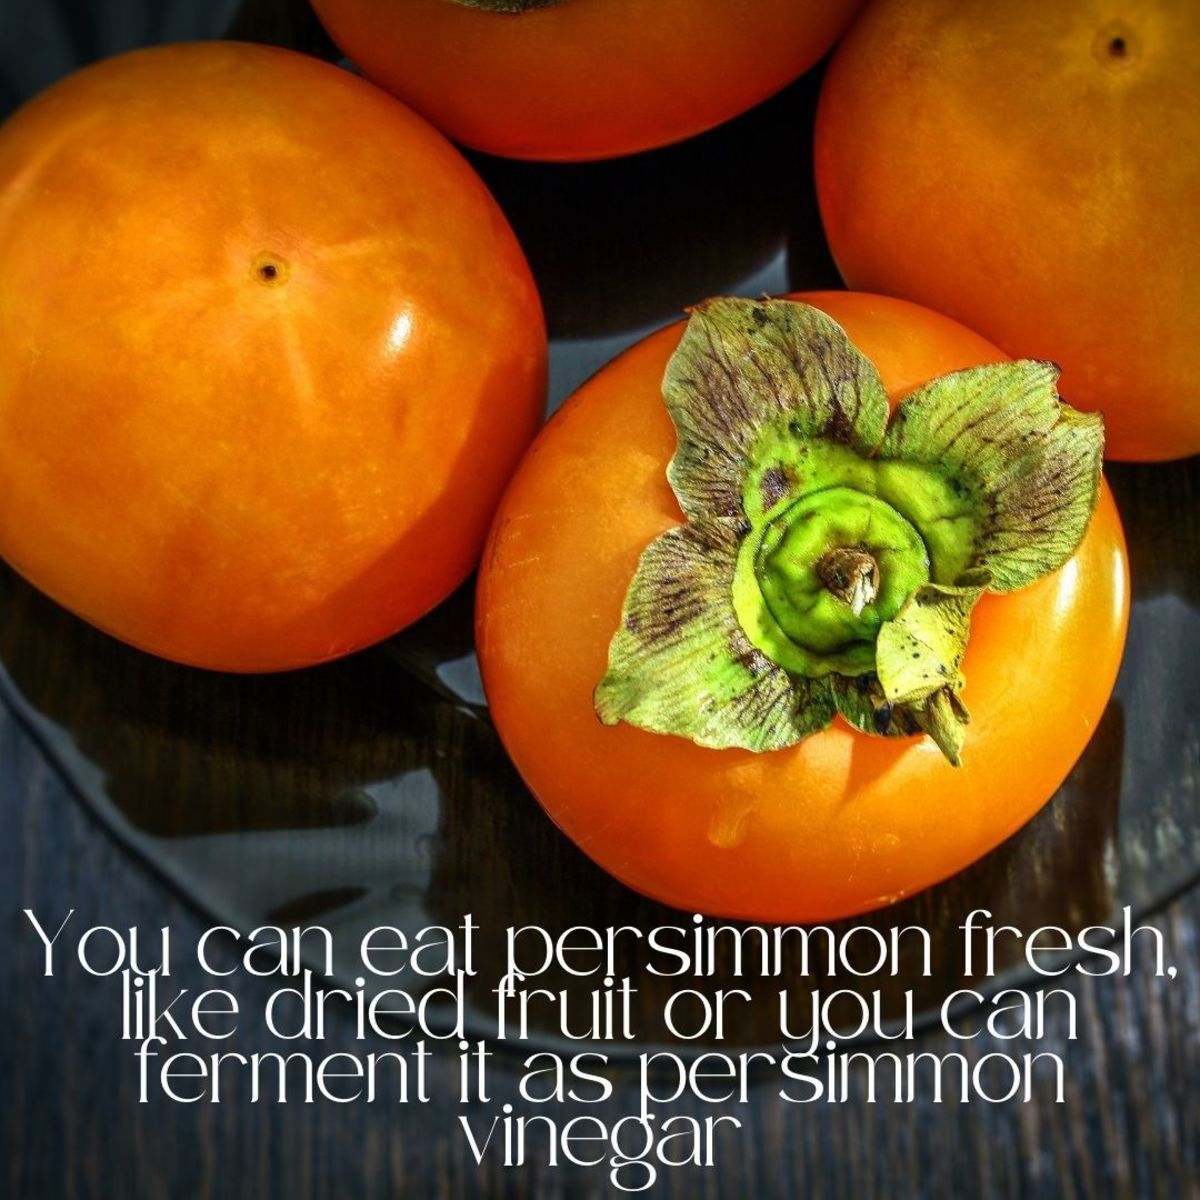 This amazing fruit makes an amazing persimmon vinegar